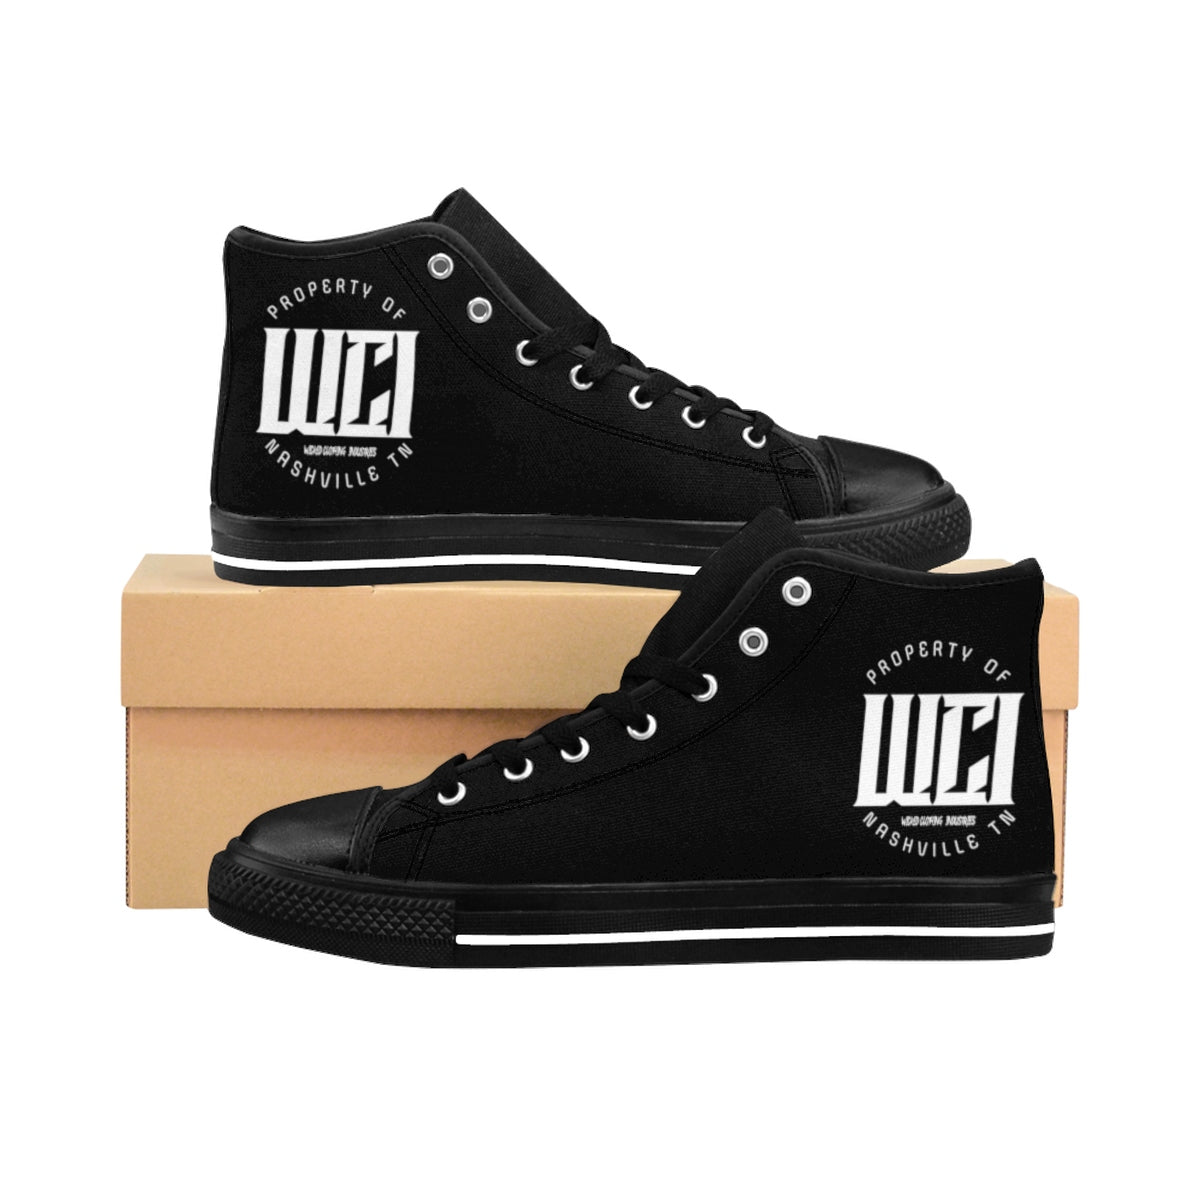 WCI/White/ High-top Sneakers